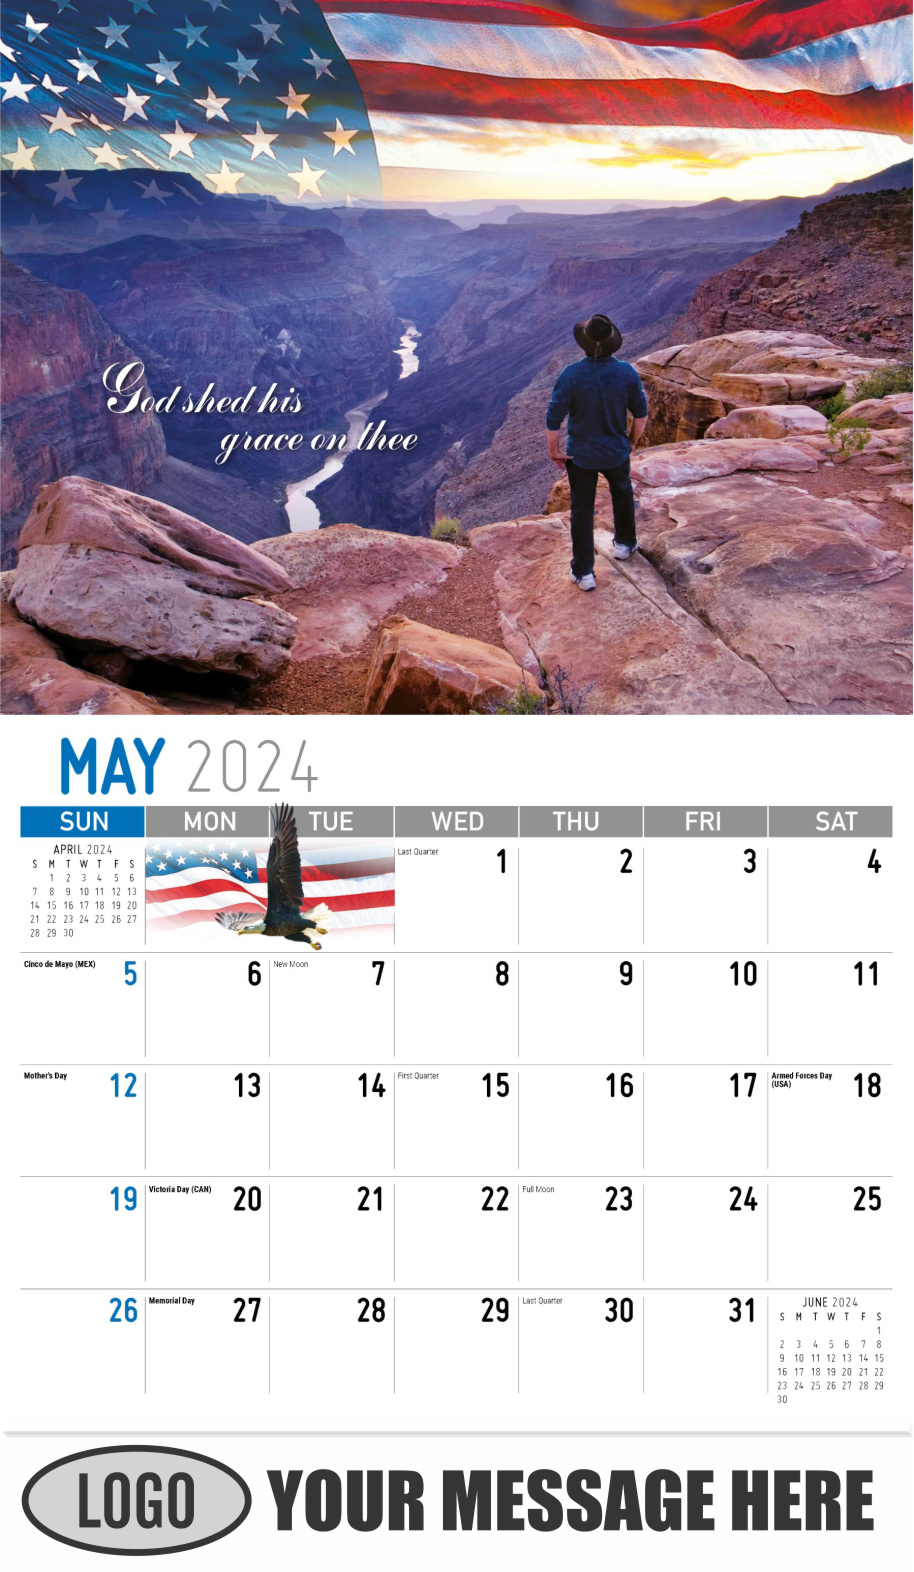 America the Beautiful  2024 Business Advertising Wall Calendar - May